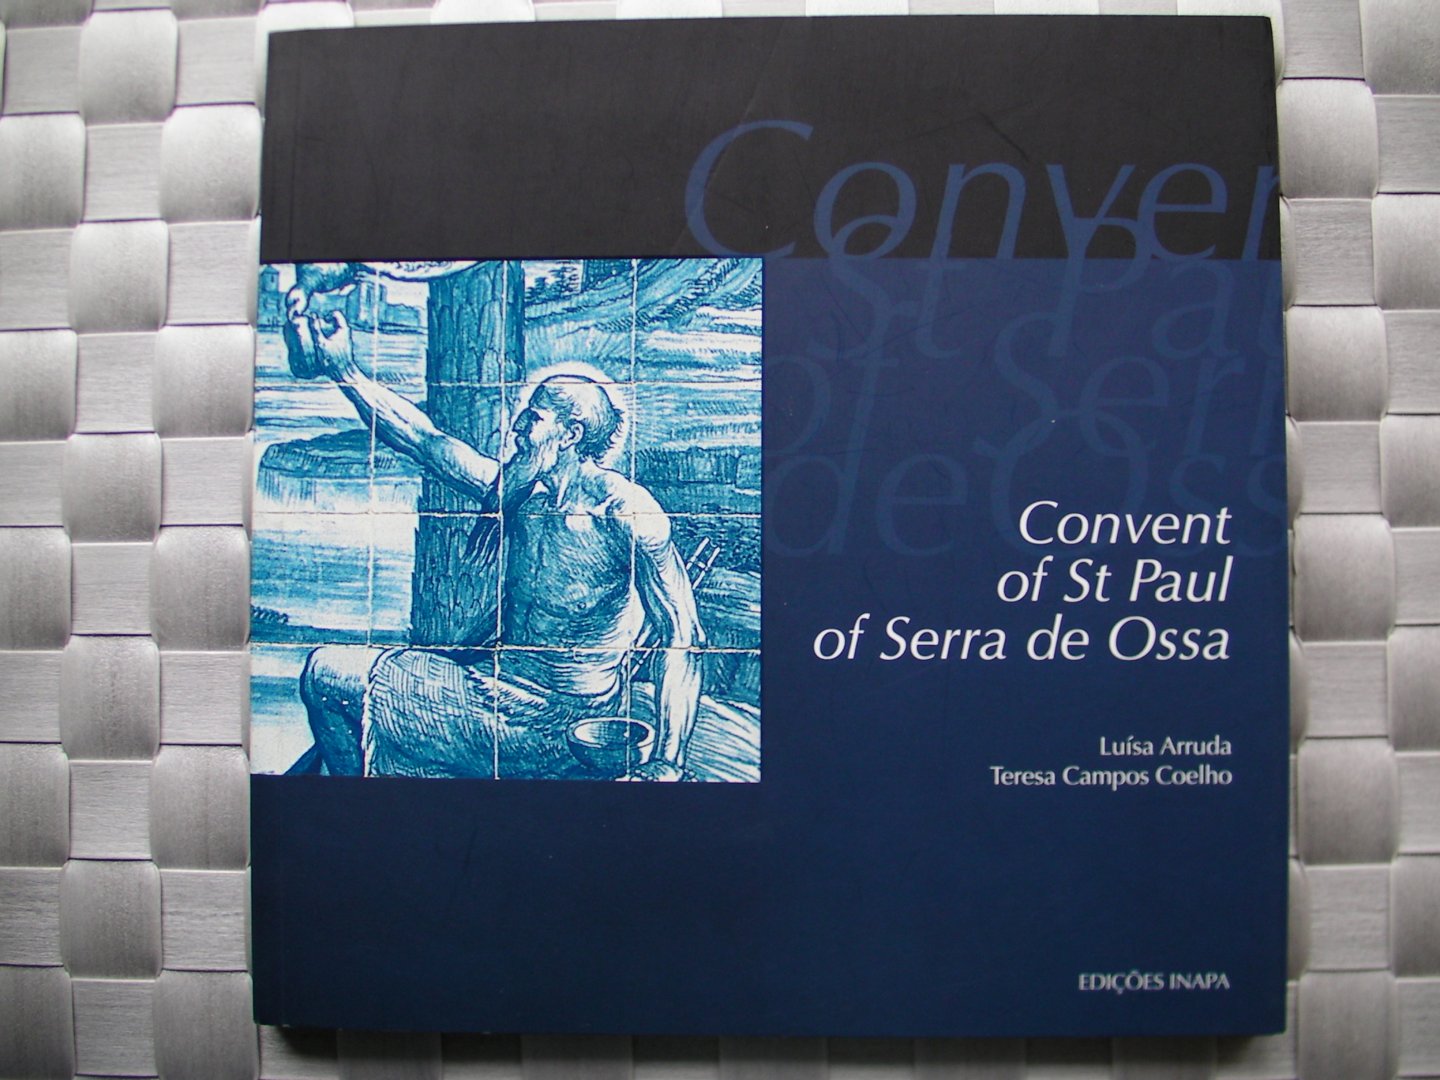 Luisa Arruda and teresa campos coelho - convent of St Paul of Serra de Ossa